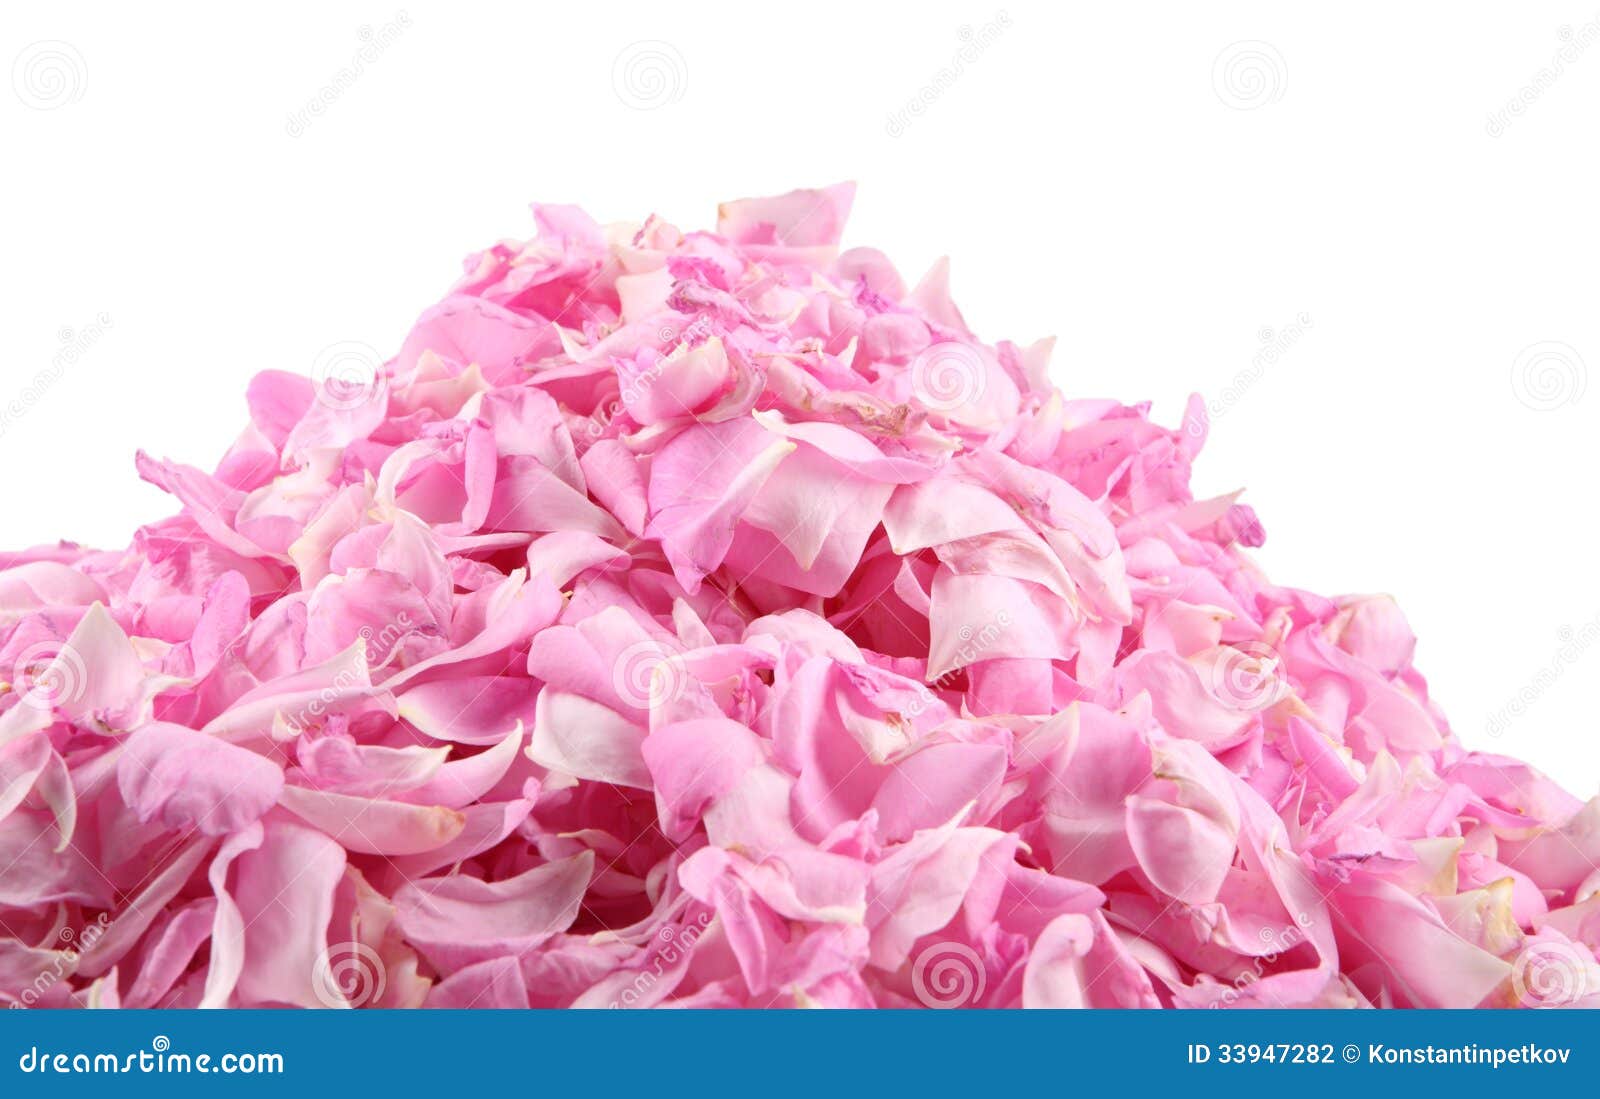 pink rose petals pile